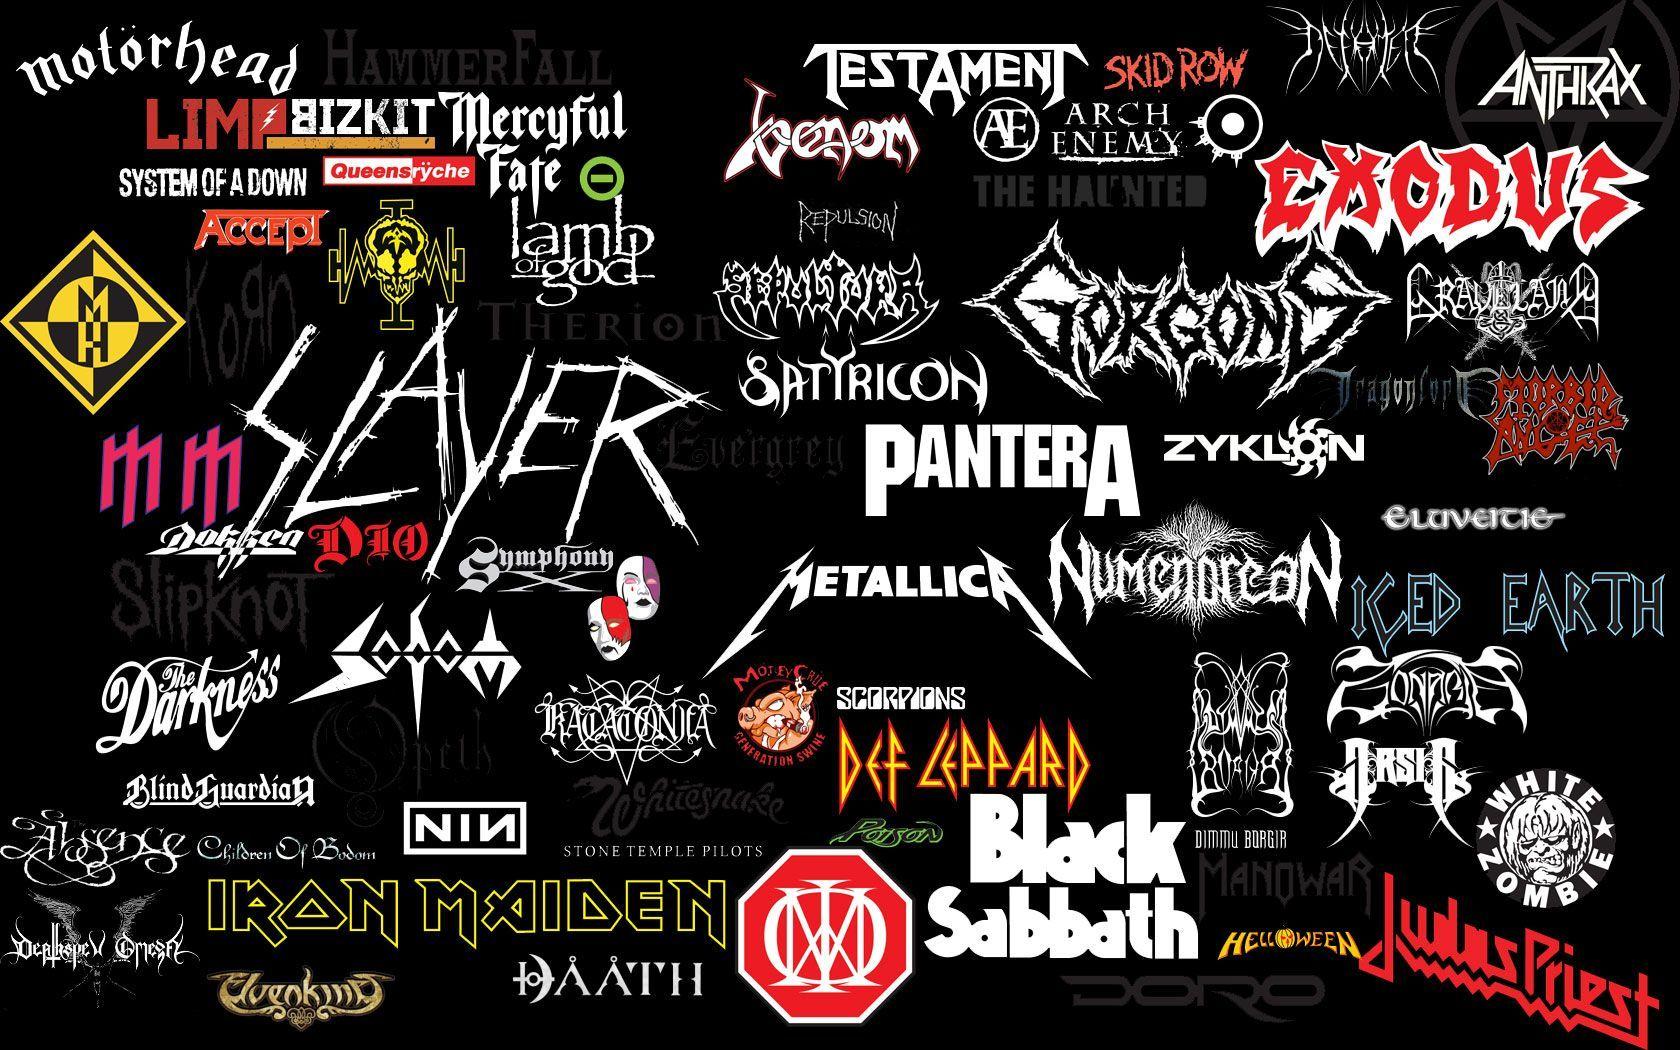 Ametal Rock Band Logo - Bands | Metal bands list - List of metal bands - Metal band names ...